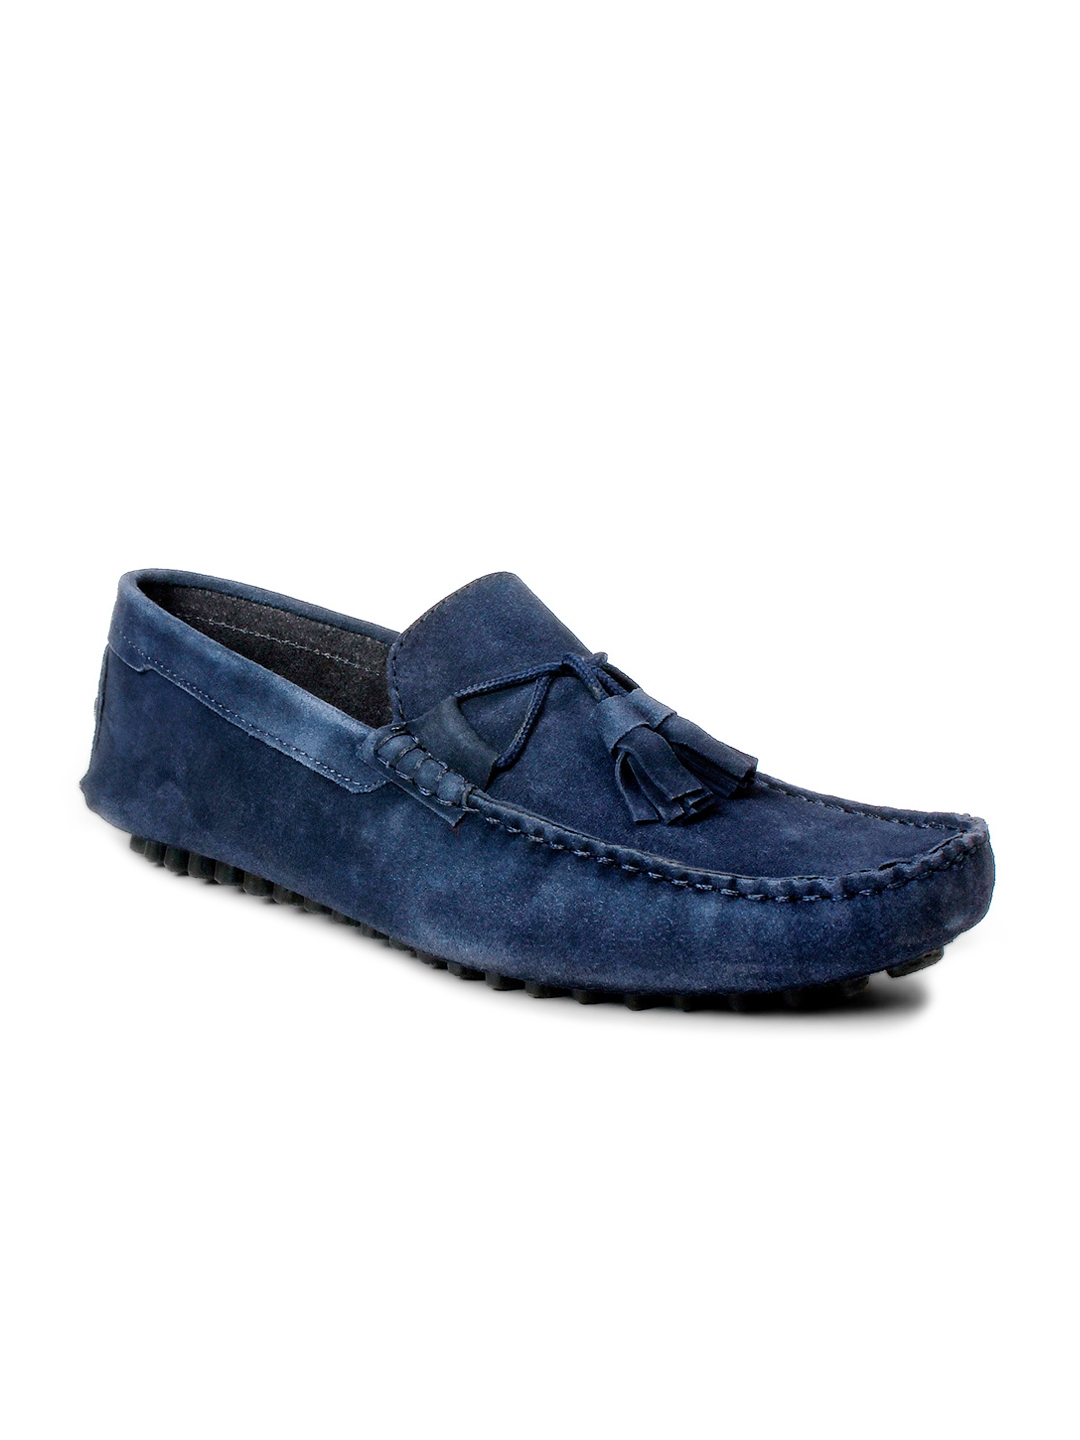 Buy Bacca Bucci Men Blue Suede Driving Shoes - Casual Shoes for Men ...